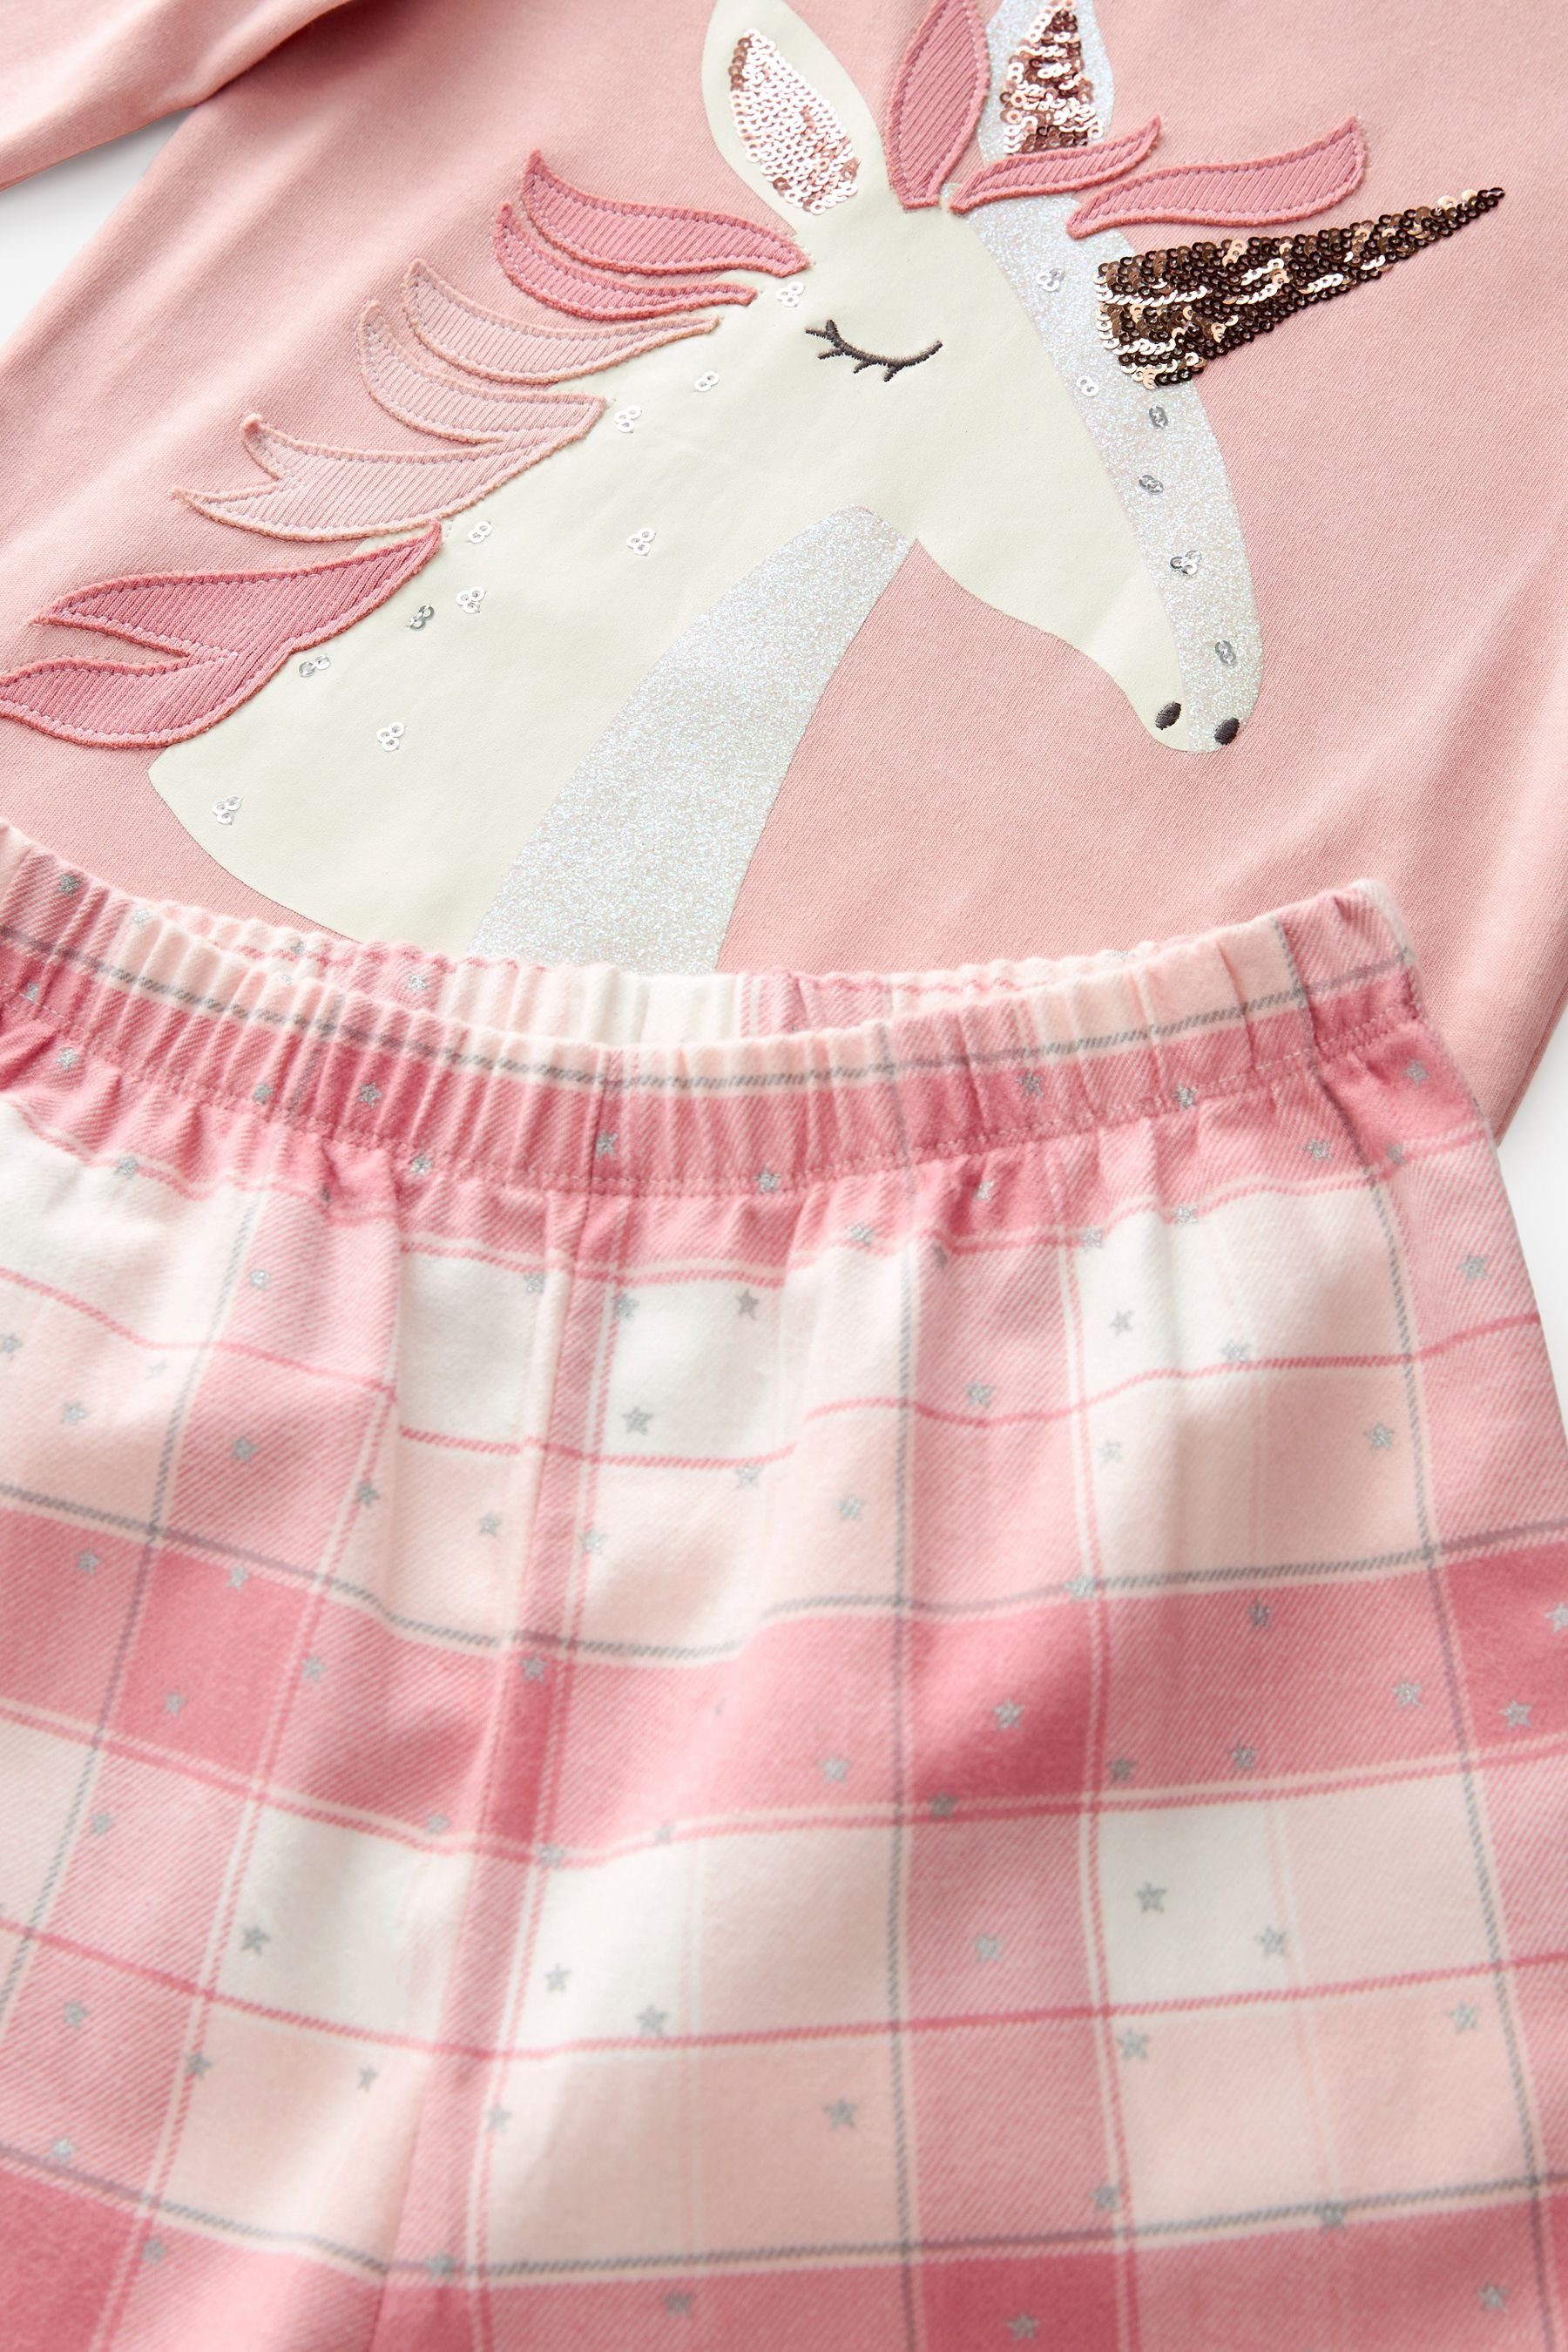 Pyjama Webkaros Pink Next Unicorn mit (2 Pyjama tlg)